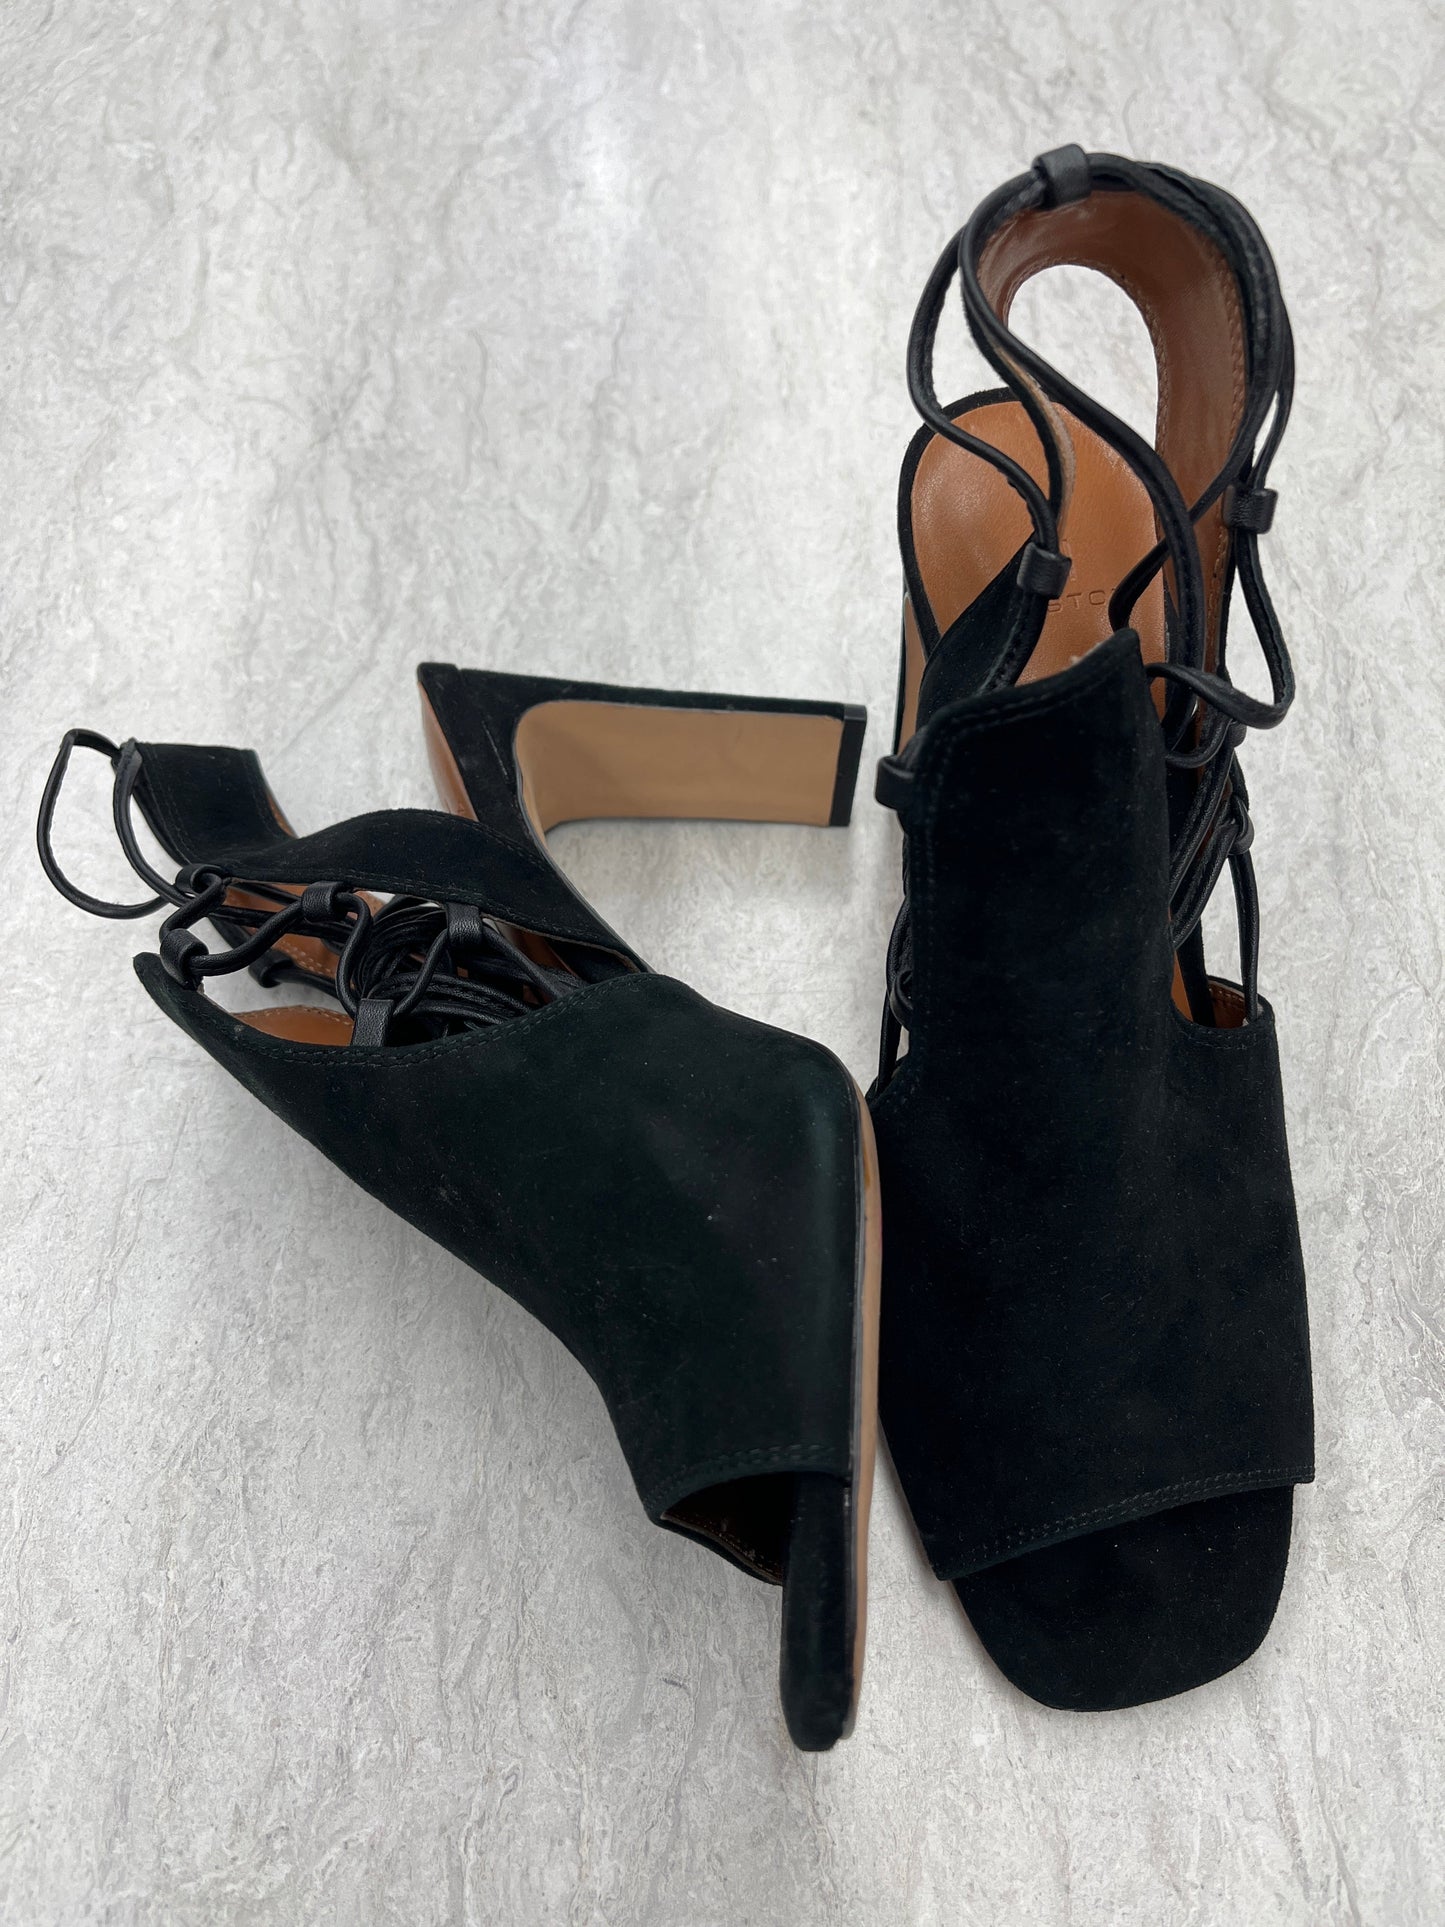 Black Shoes Heels Block Halston, Size 8